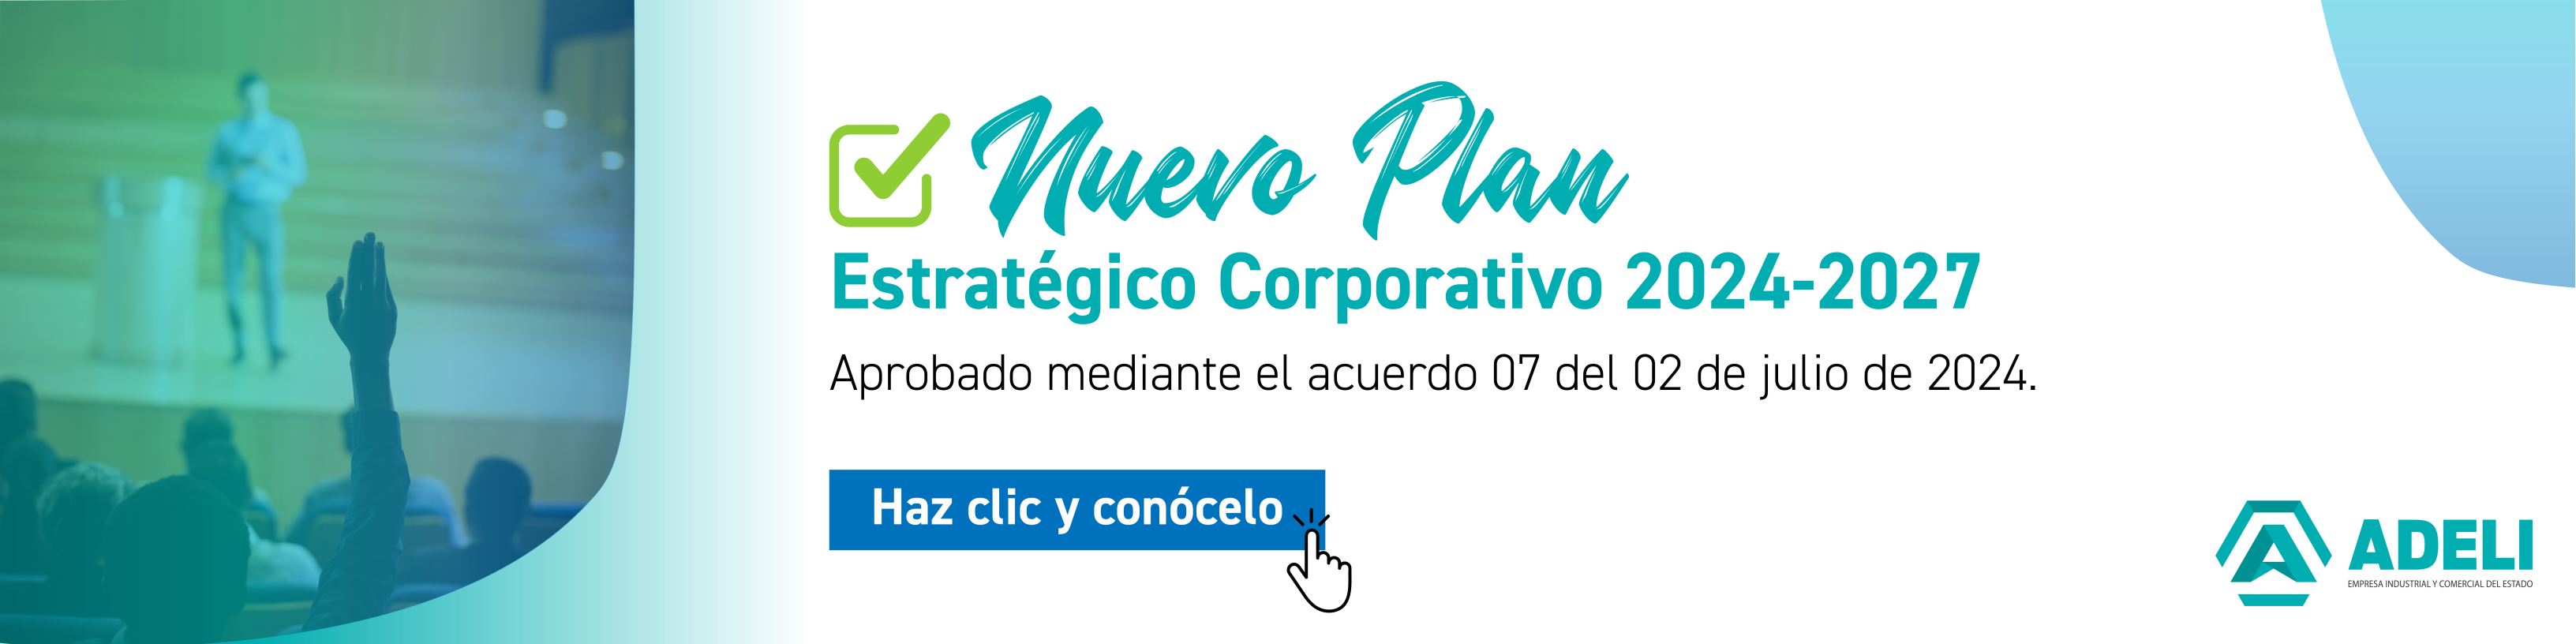 Nuevo Plan Estratégico Corporativo 2024-2027